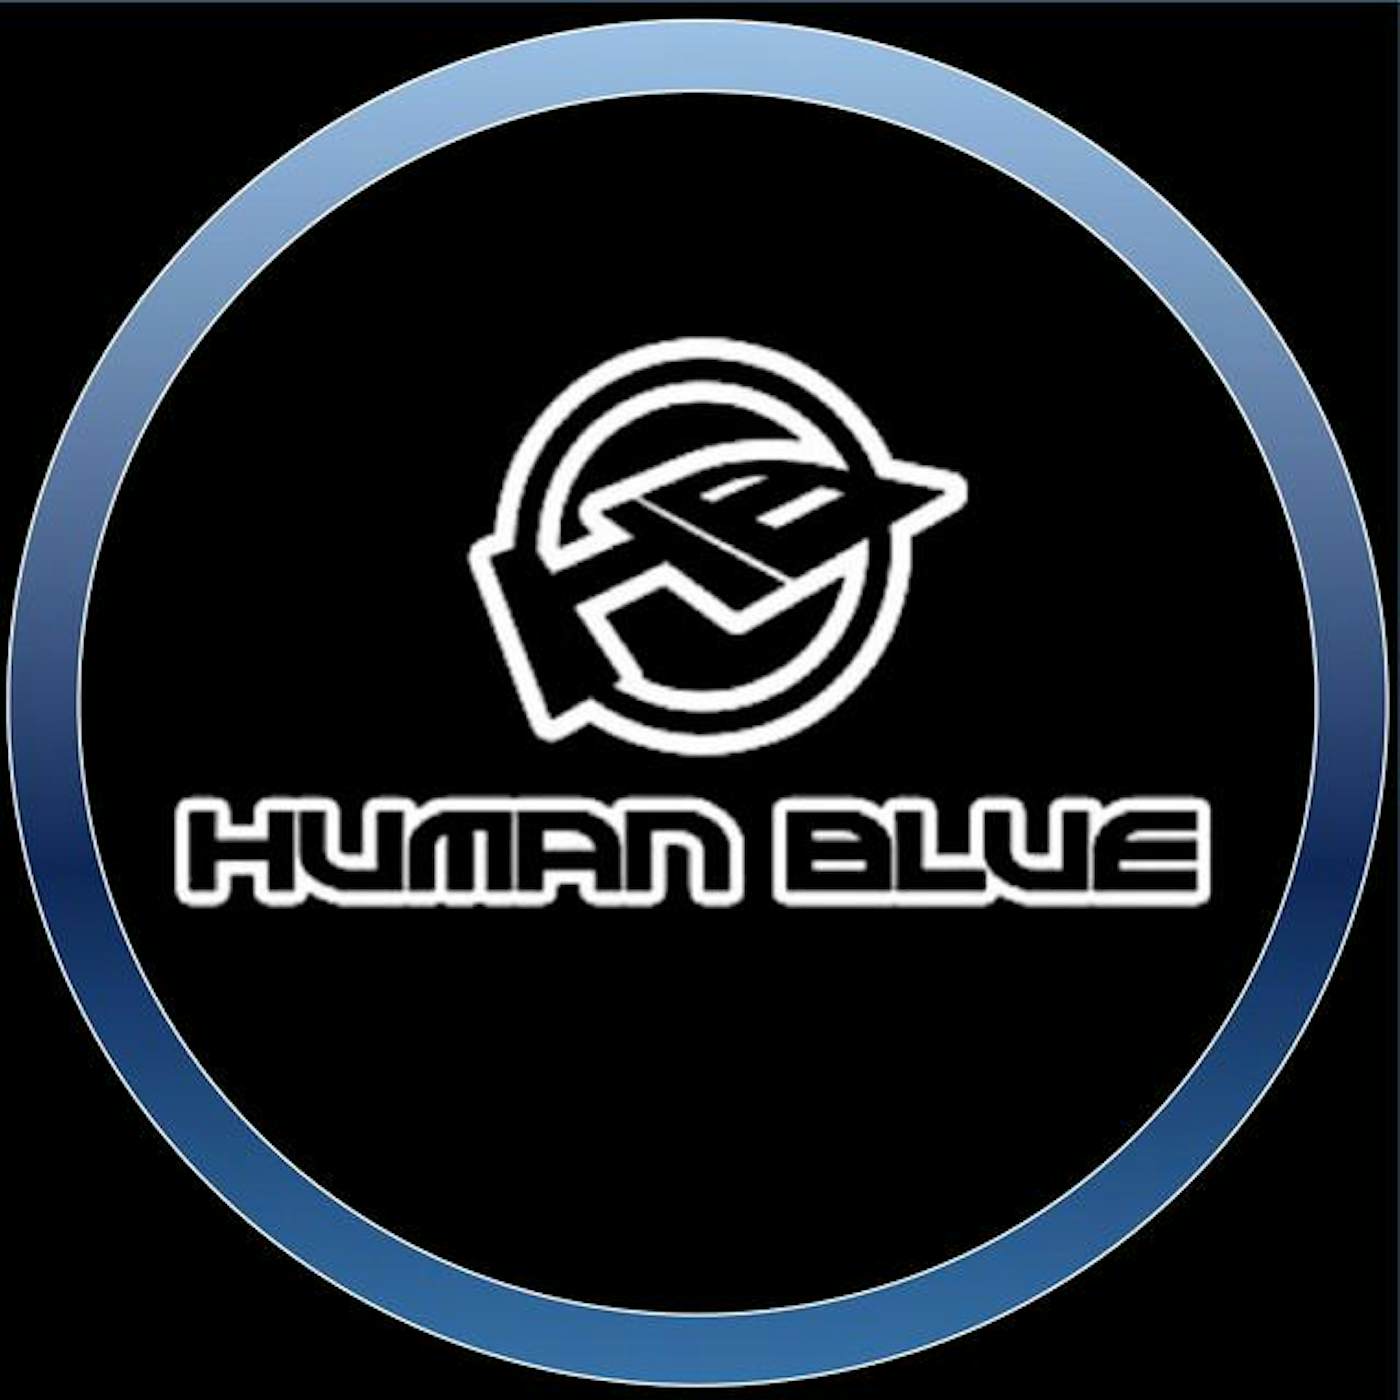 Human Blue